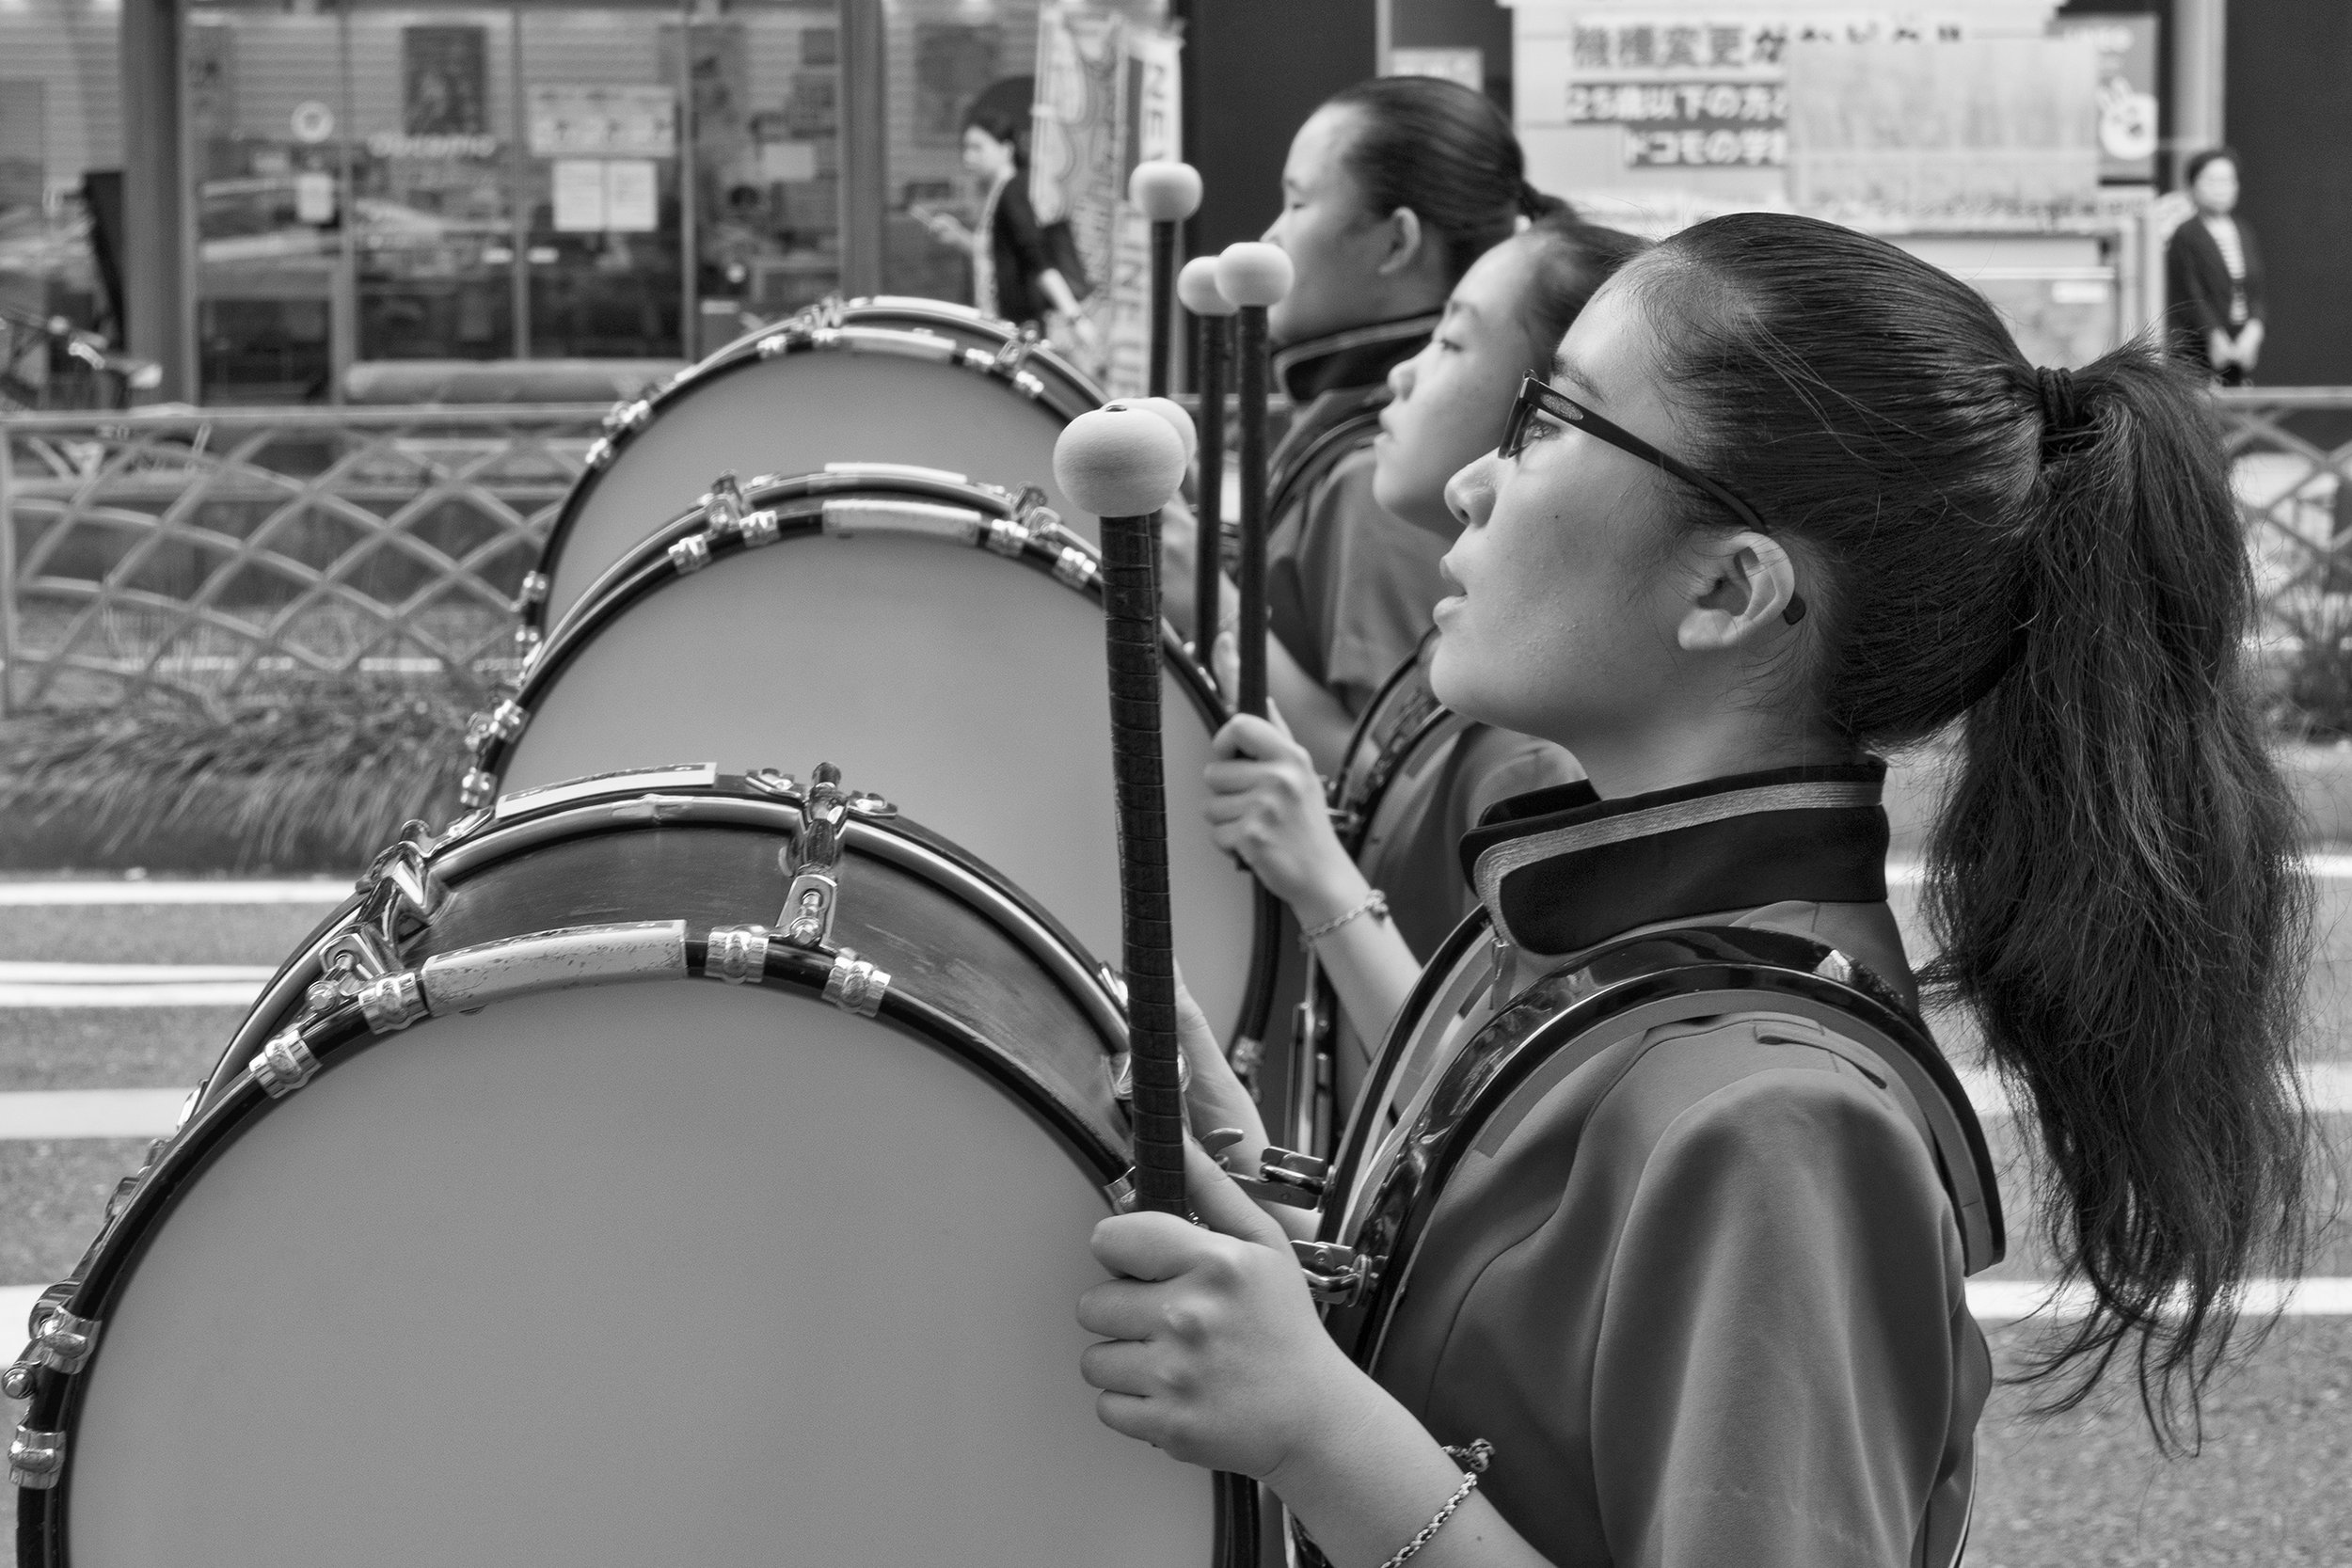 Medium_Nagoya marching band 2.jpg